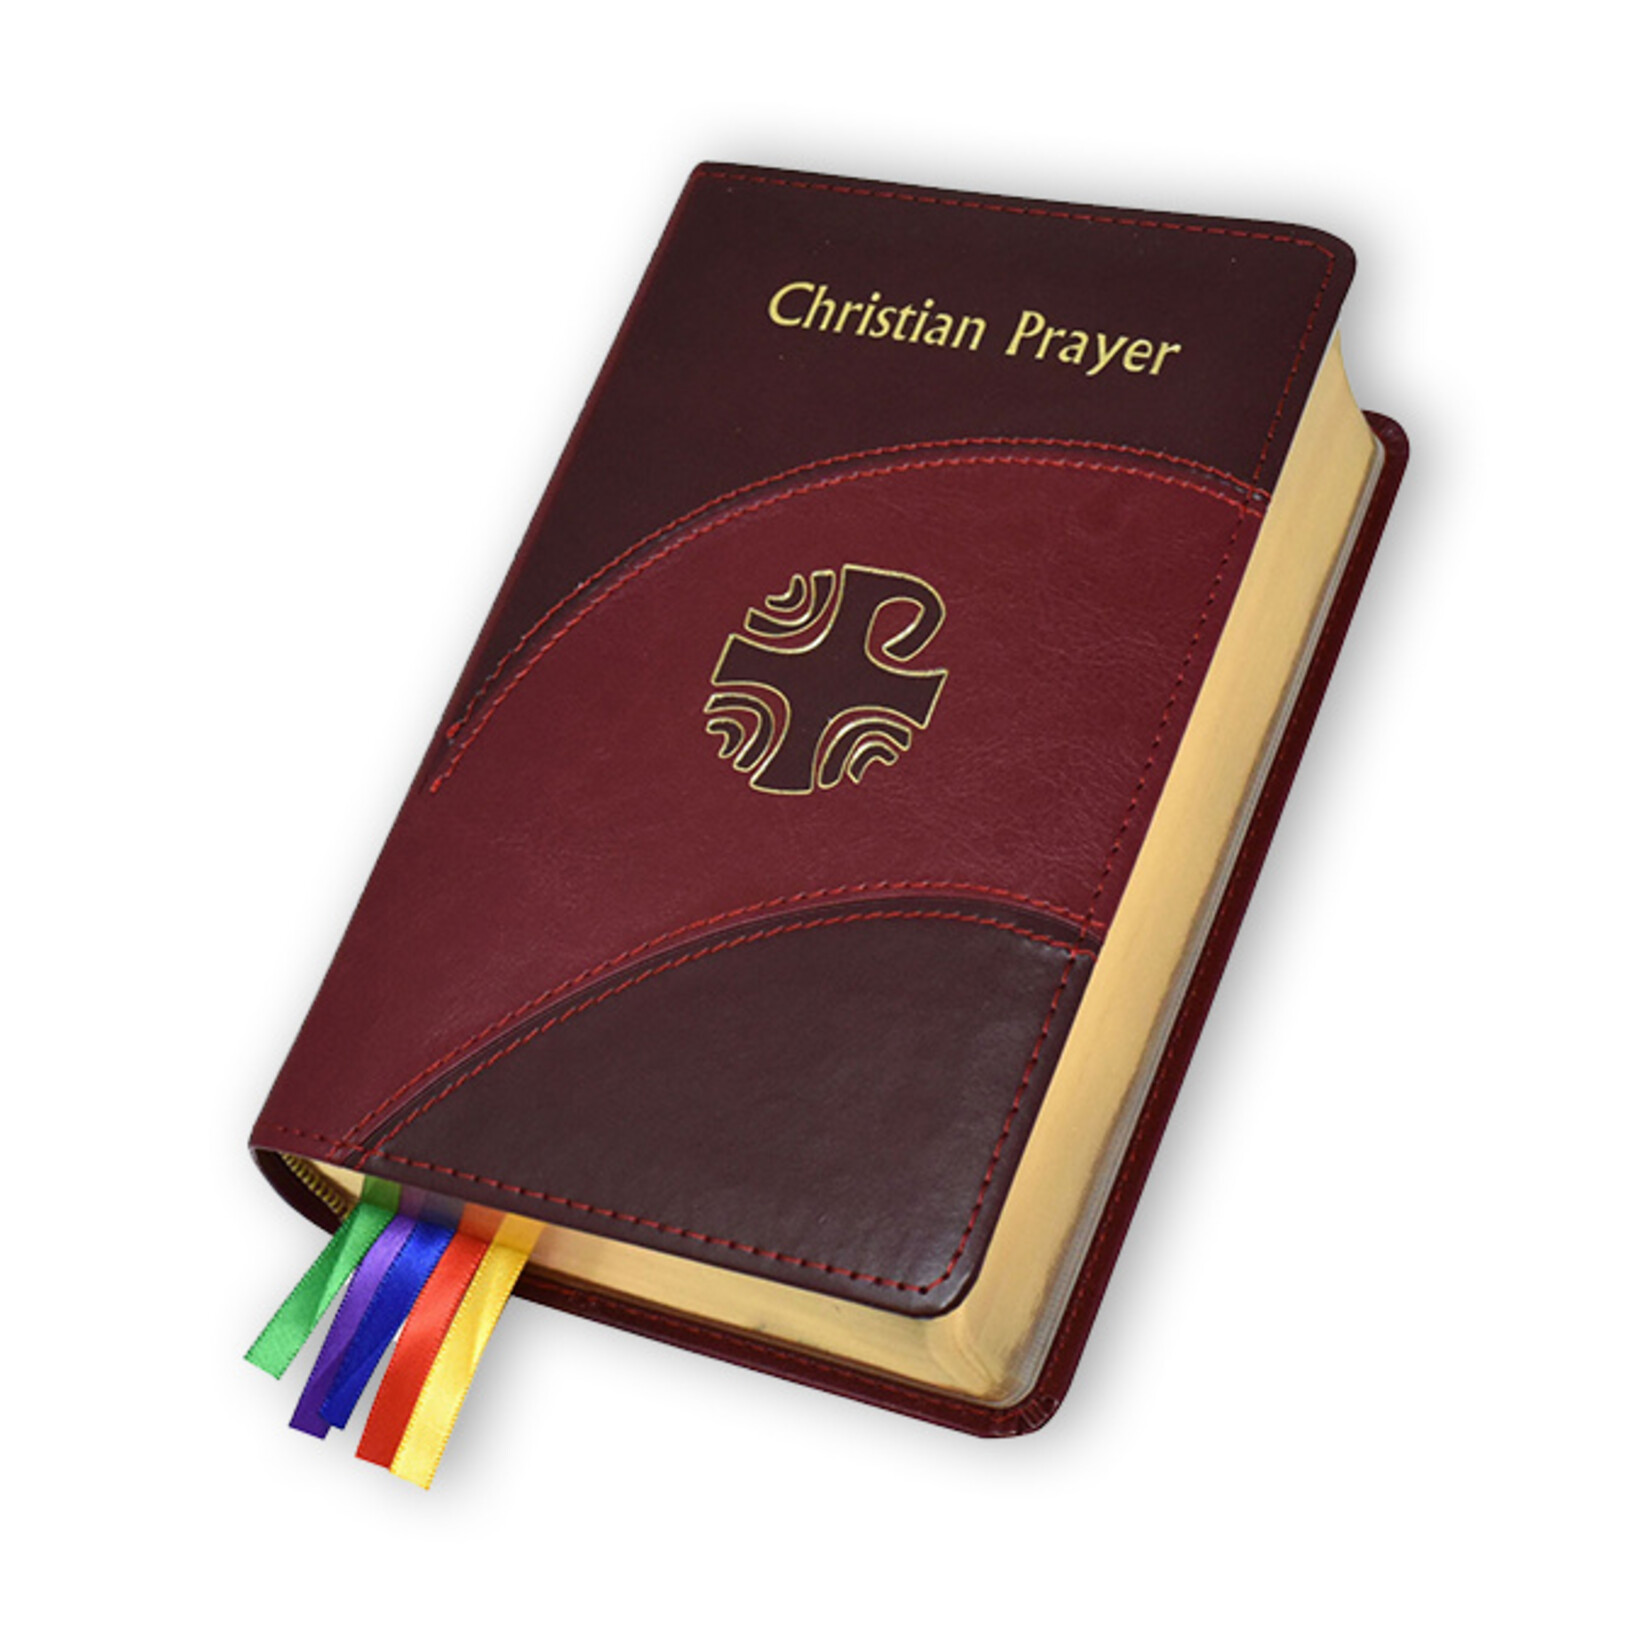 Christian Prayer - Lux Version